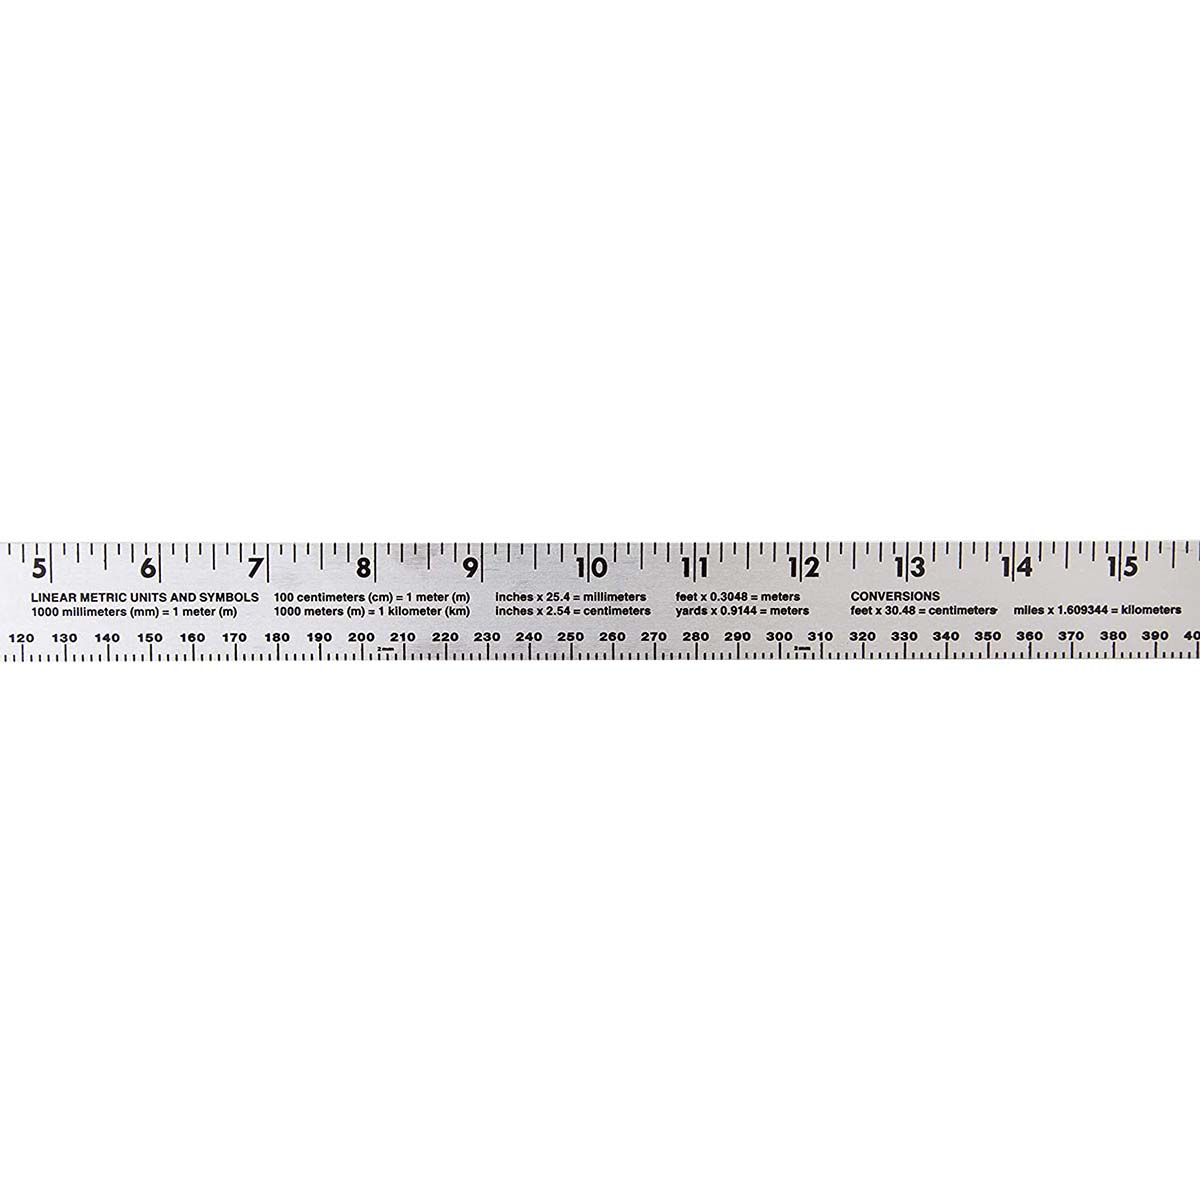 Mayes 36 Inch X 1 Inch Aluminum Ruler